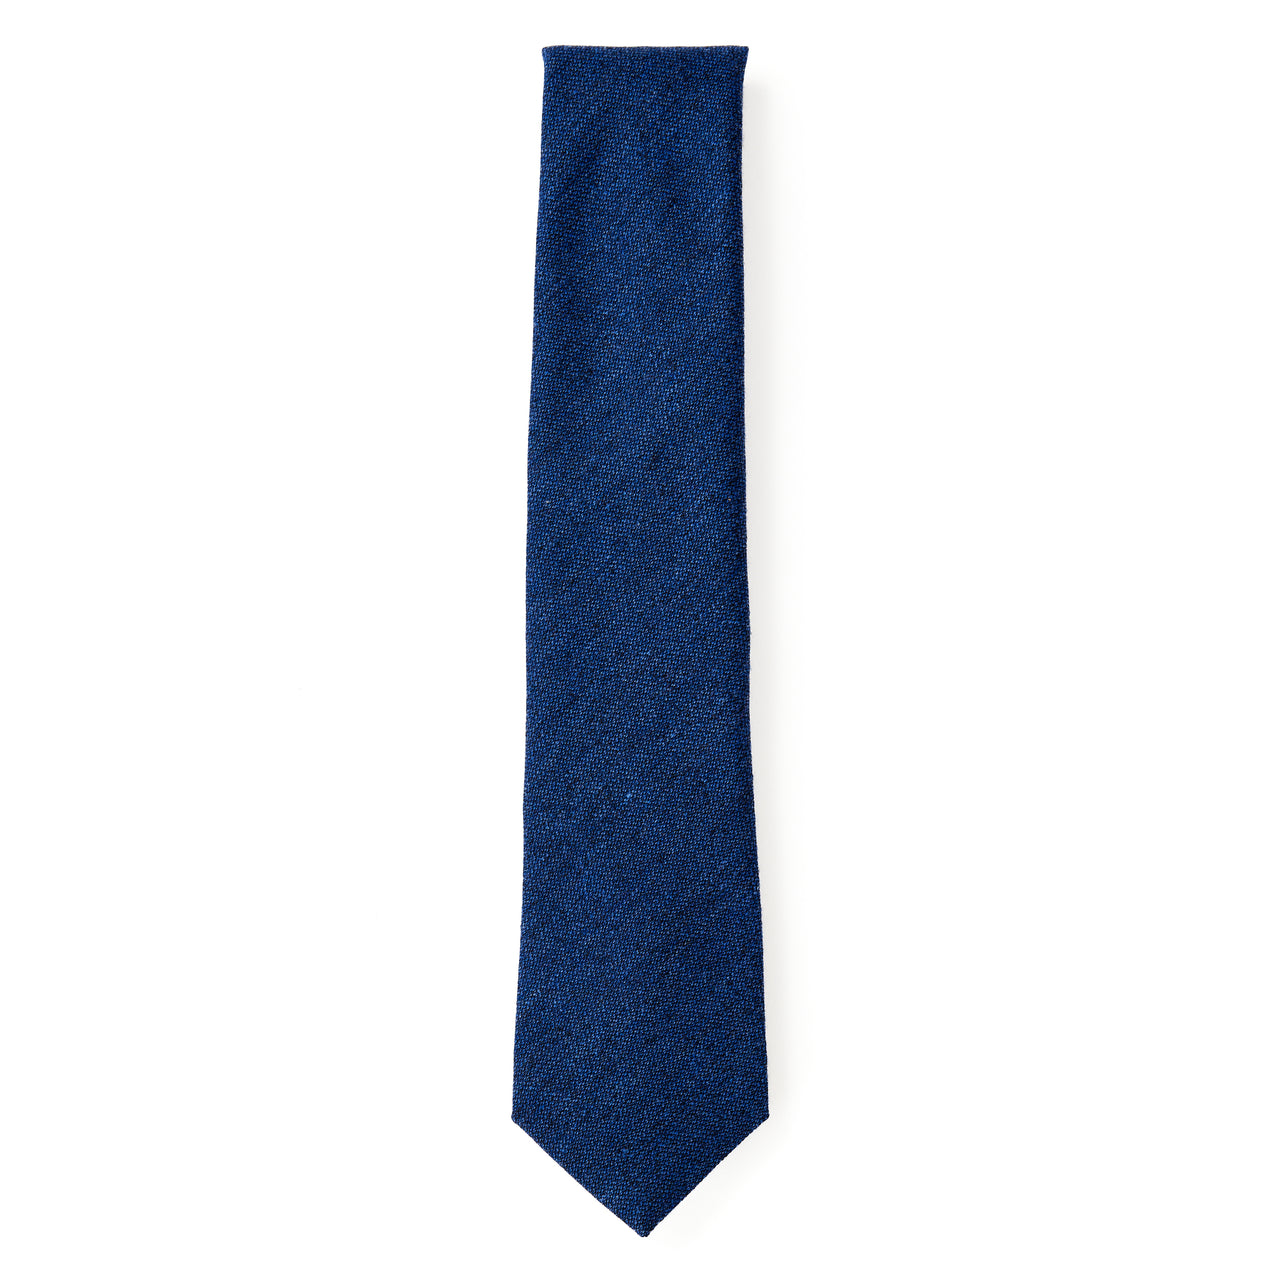 HENRY SARTORIAL x HEMLEY Printed Tie BLUE